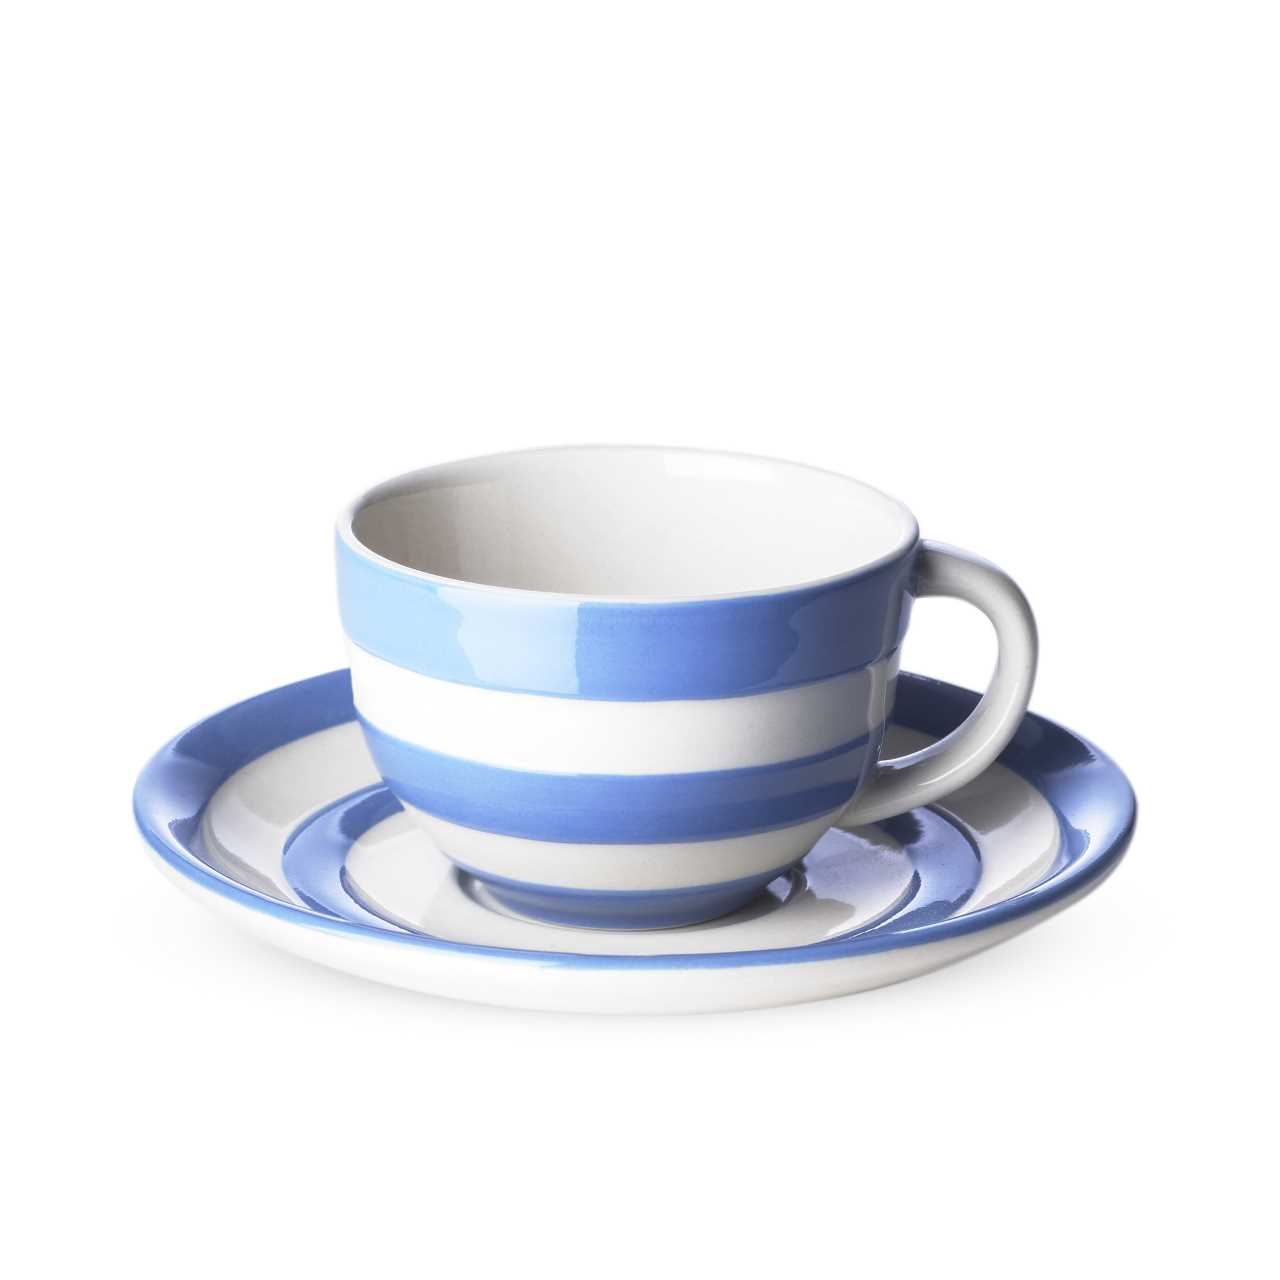 Cornishware Cup & Saucer Set in blue stripes